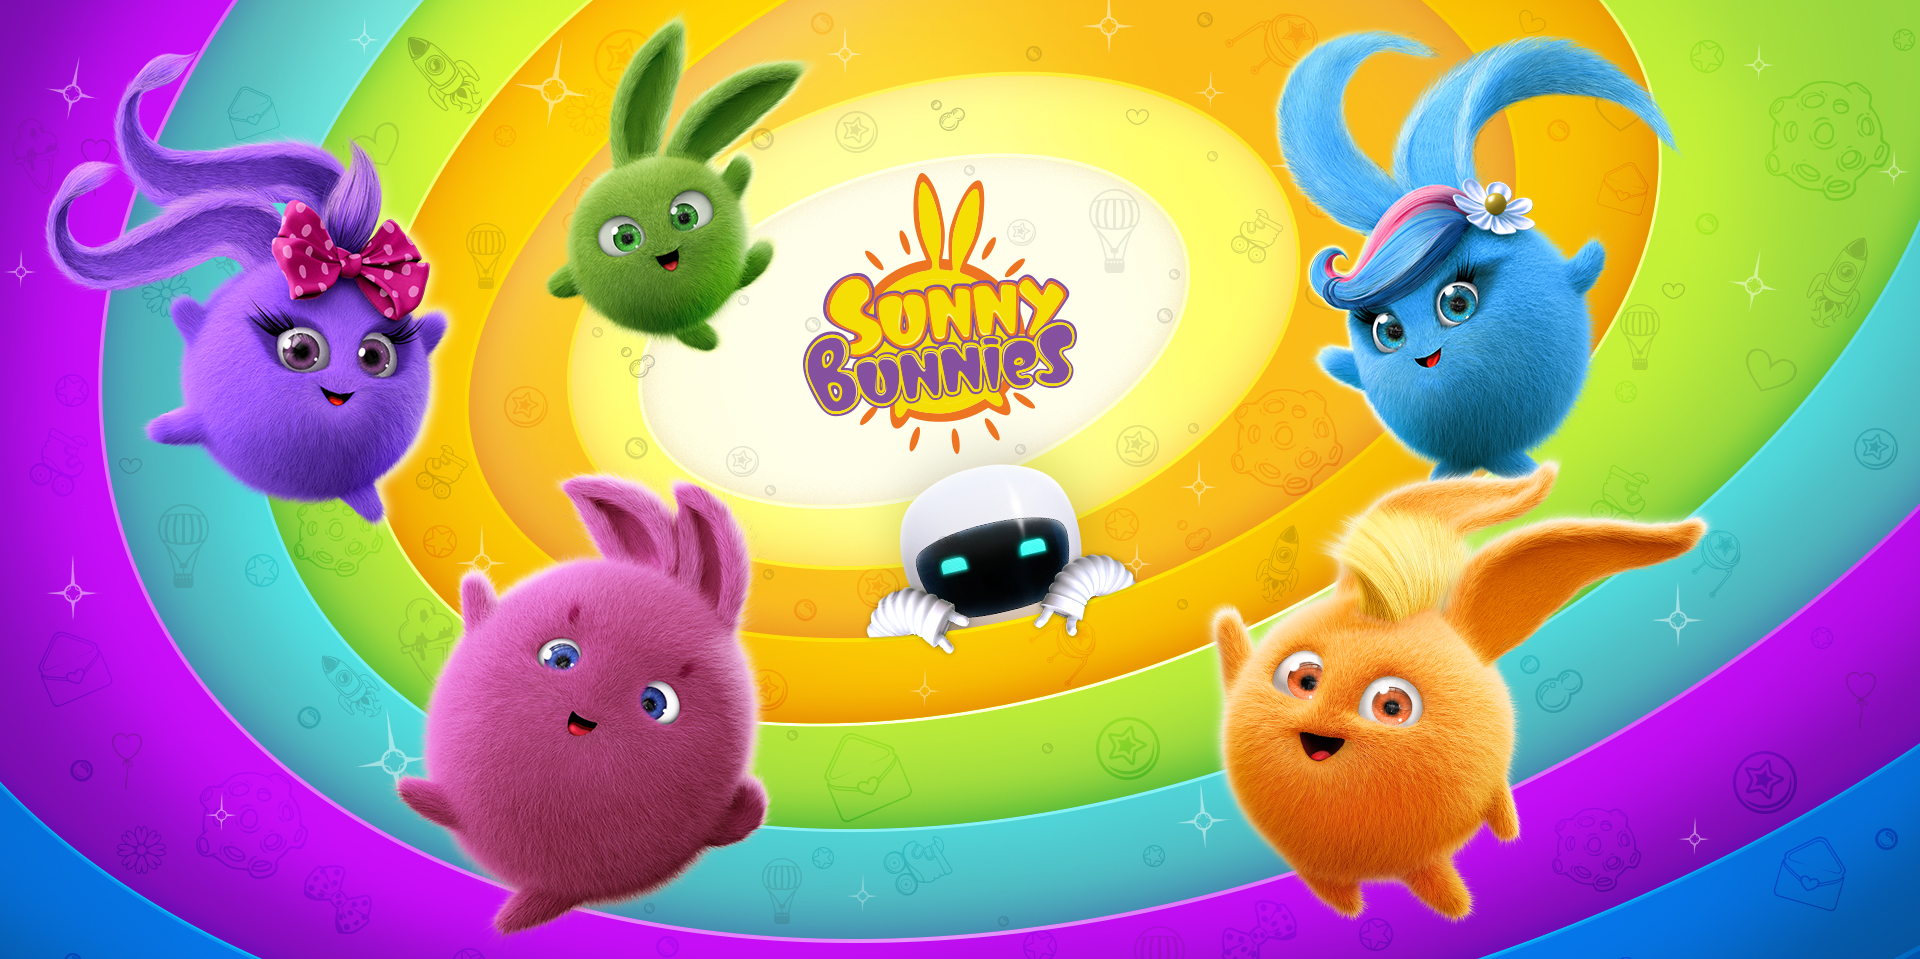 Sunny Bunnies - cartoons for children